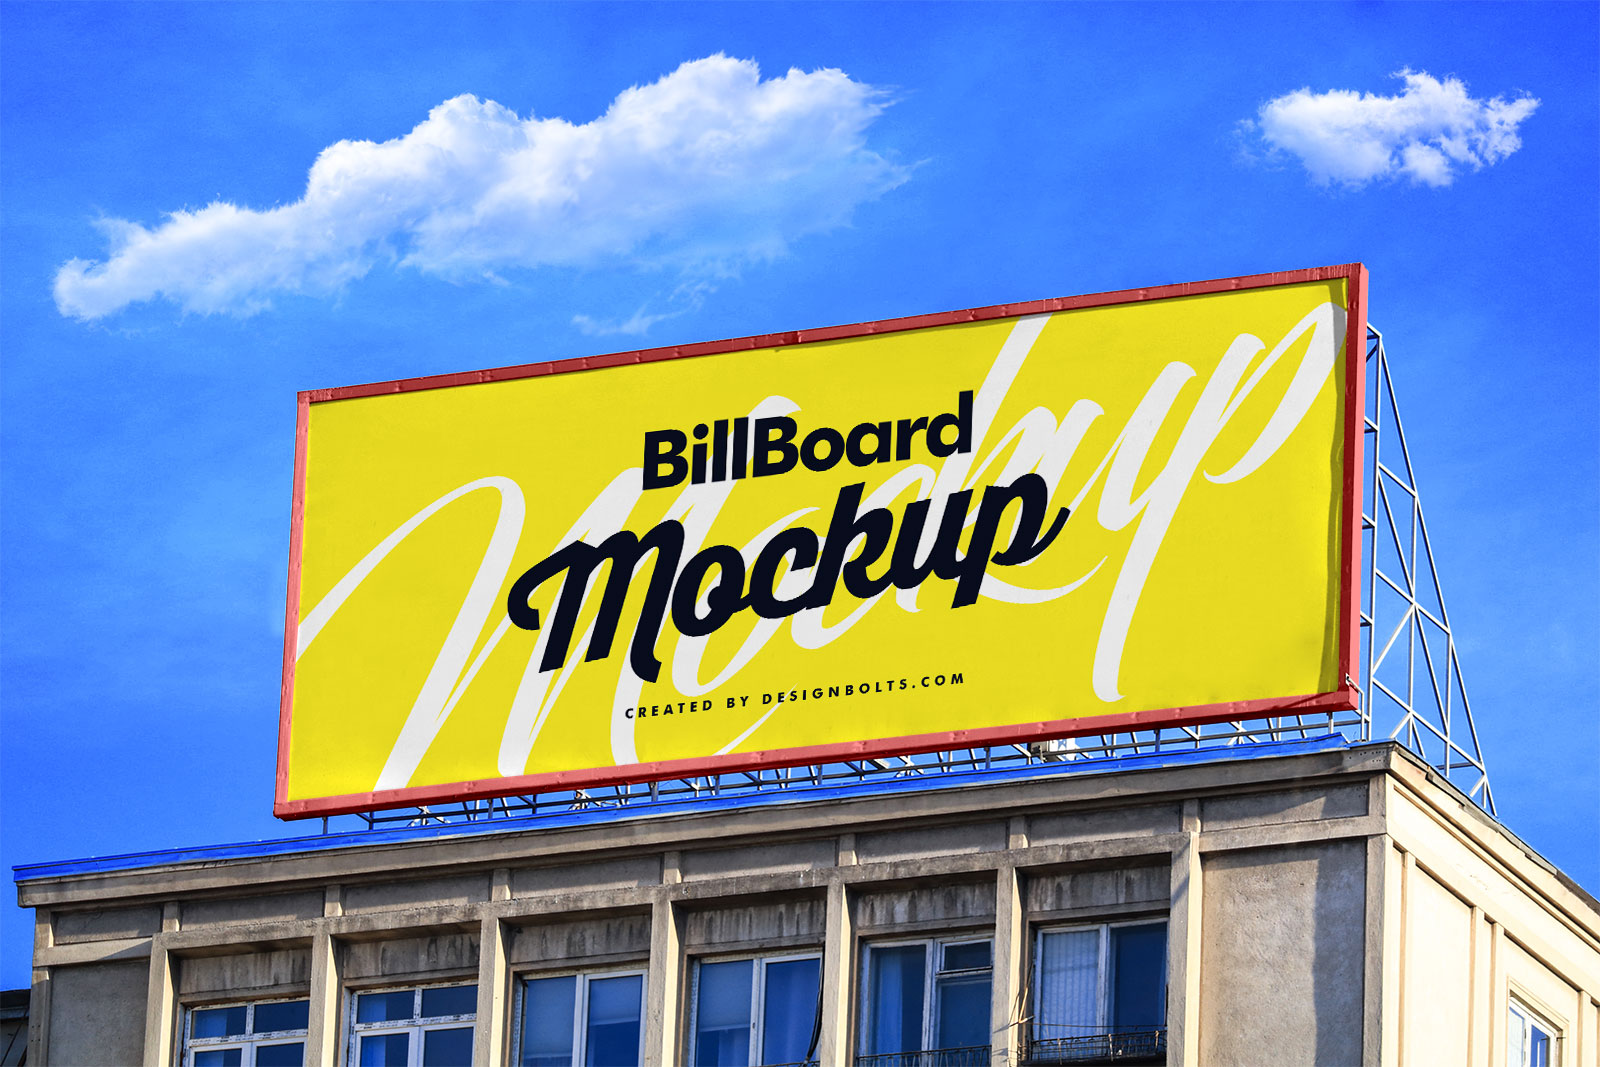 Free-Outdoor-Advertising-Billboard-on-Building-Mockup-PSD